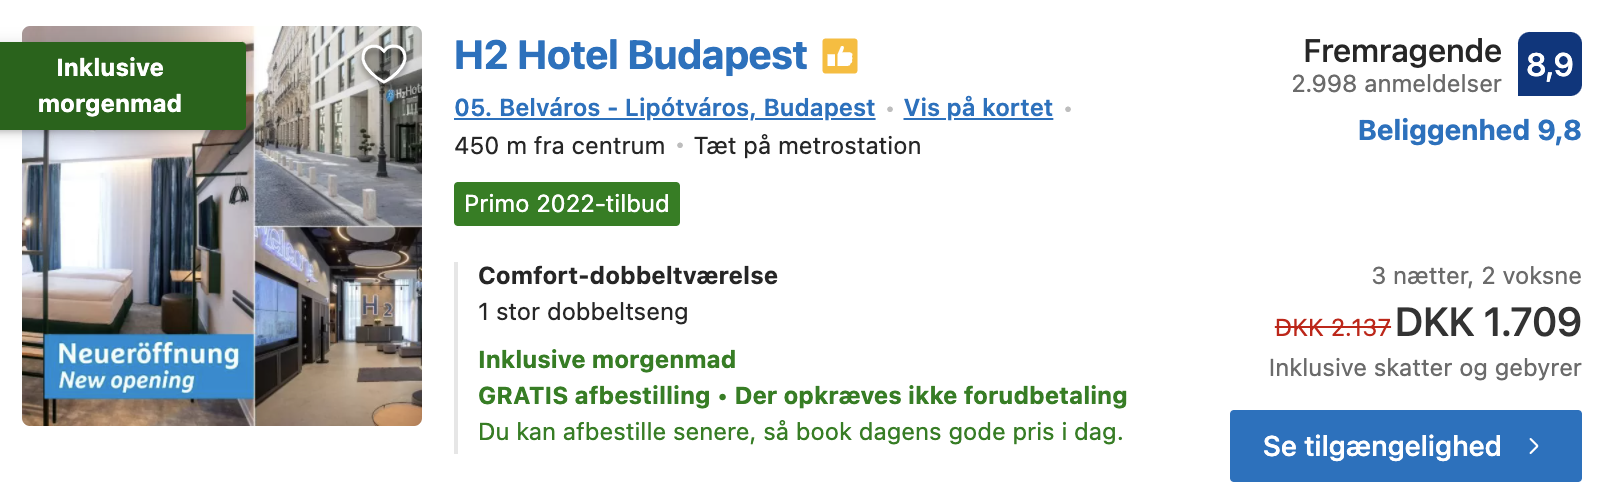 budapest hotel